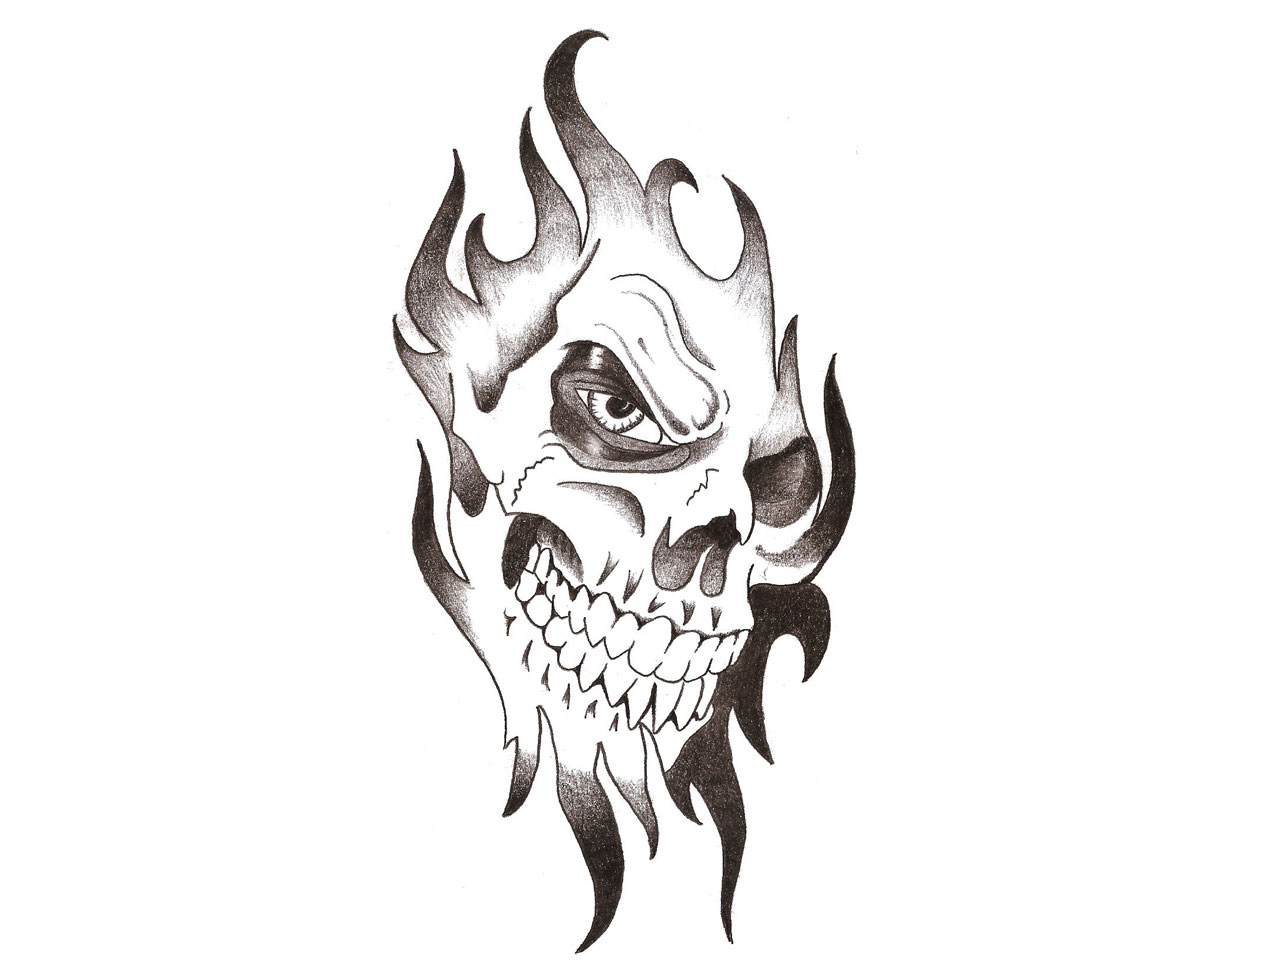 Free Skull Tattoo Stencils, Download Free Skull Tattoo Stencils png images,  Free ClipArts on Clipart Library